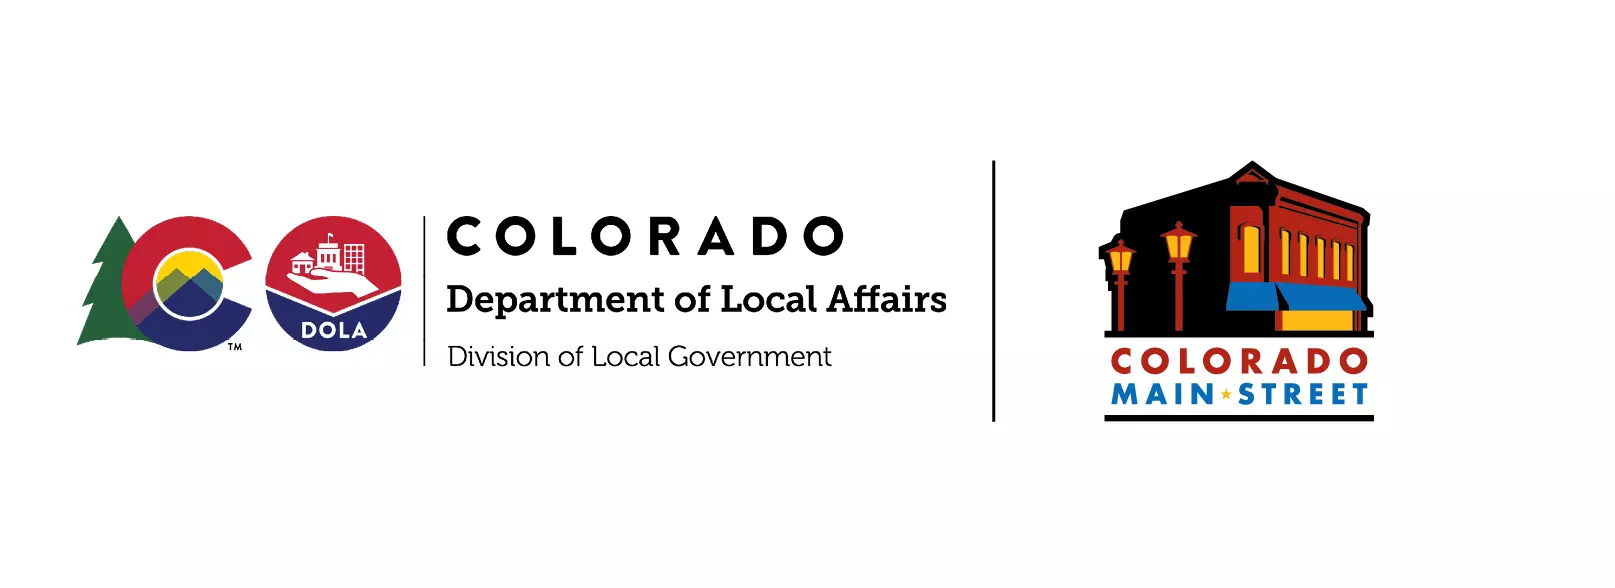 Colorado Main Street Logo